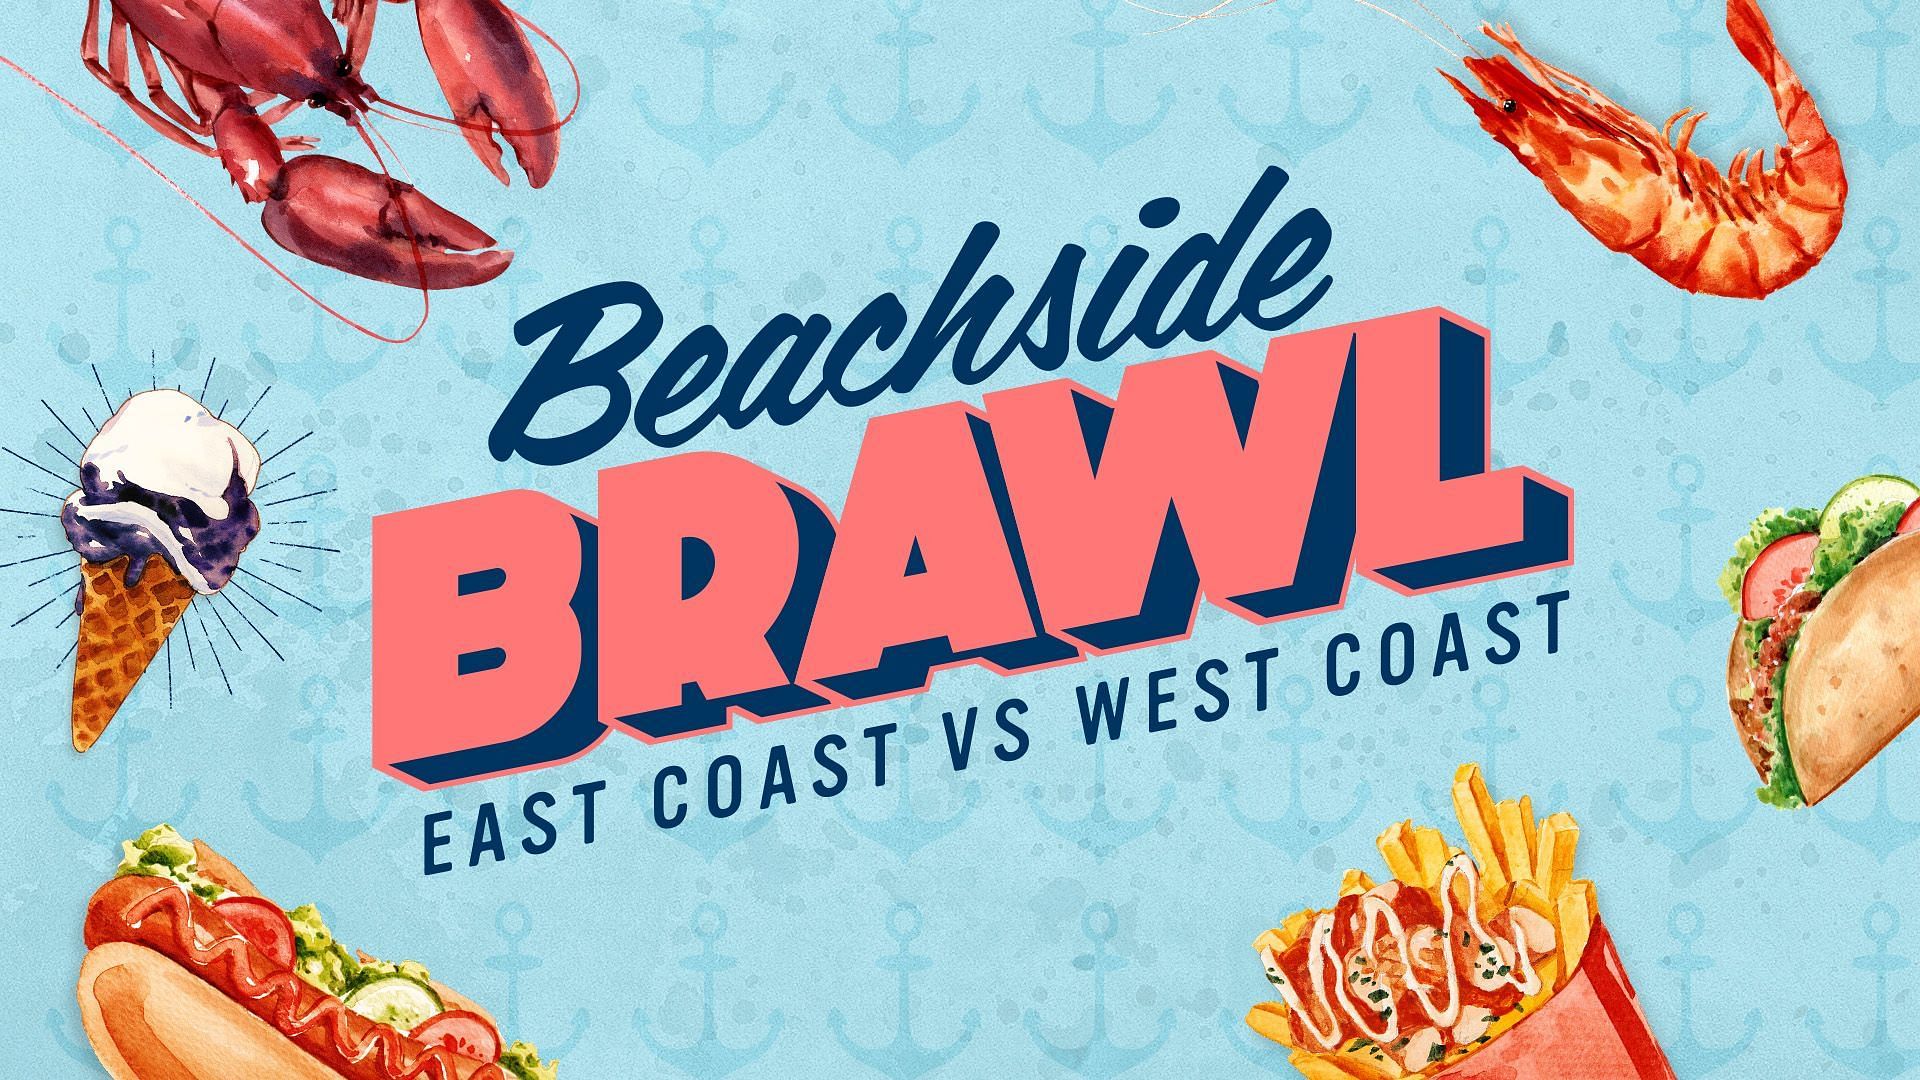 Beachside Brawl (Image via Food Network)